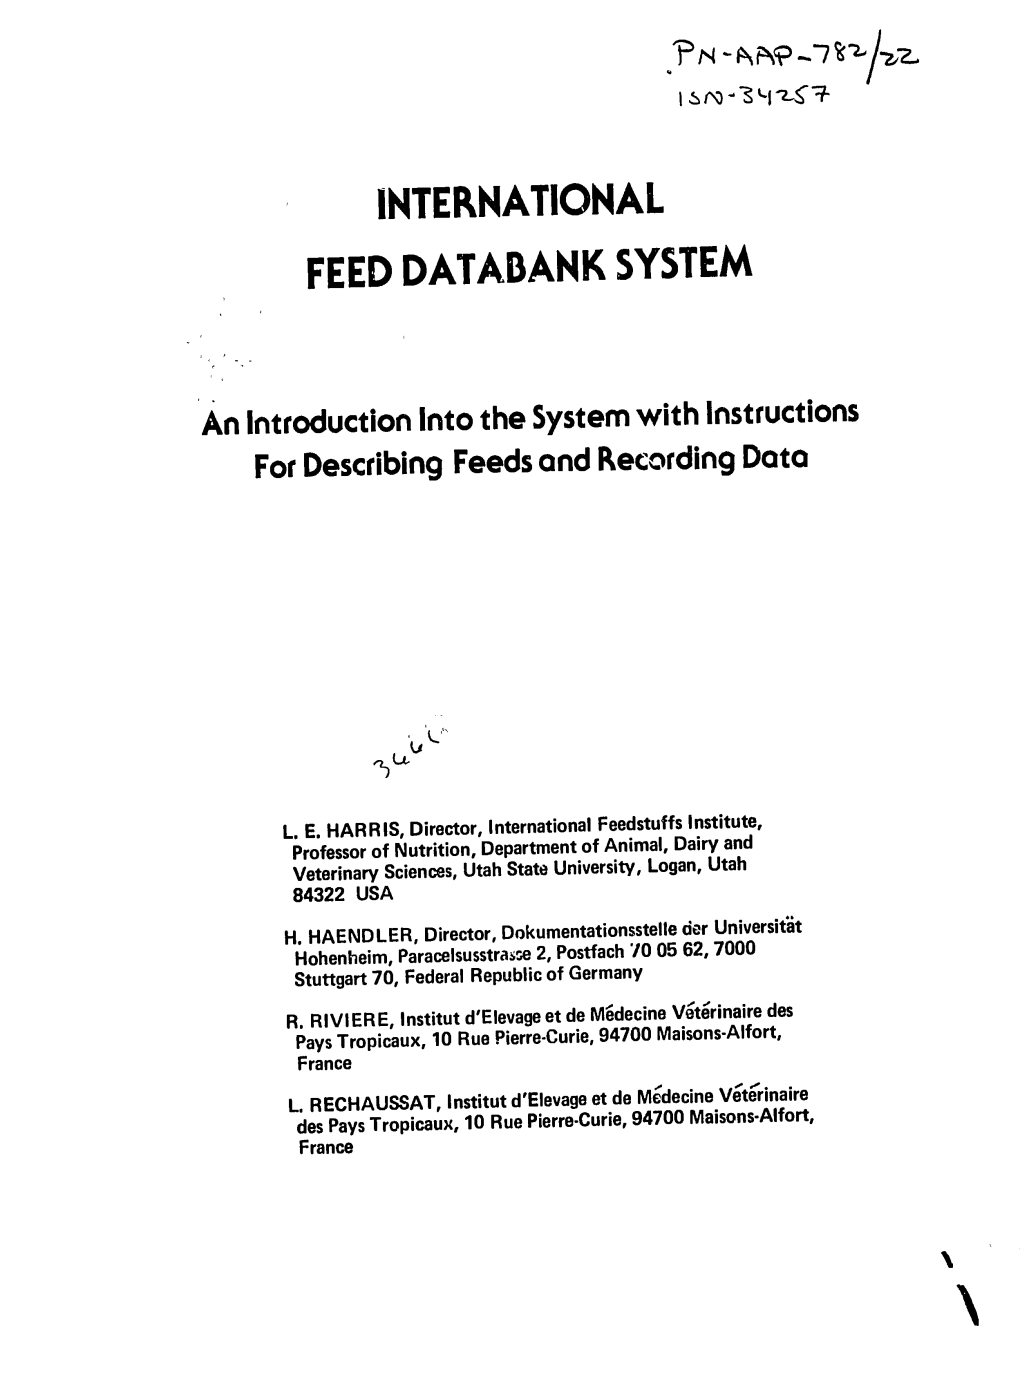 International Feed Databank System